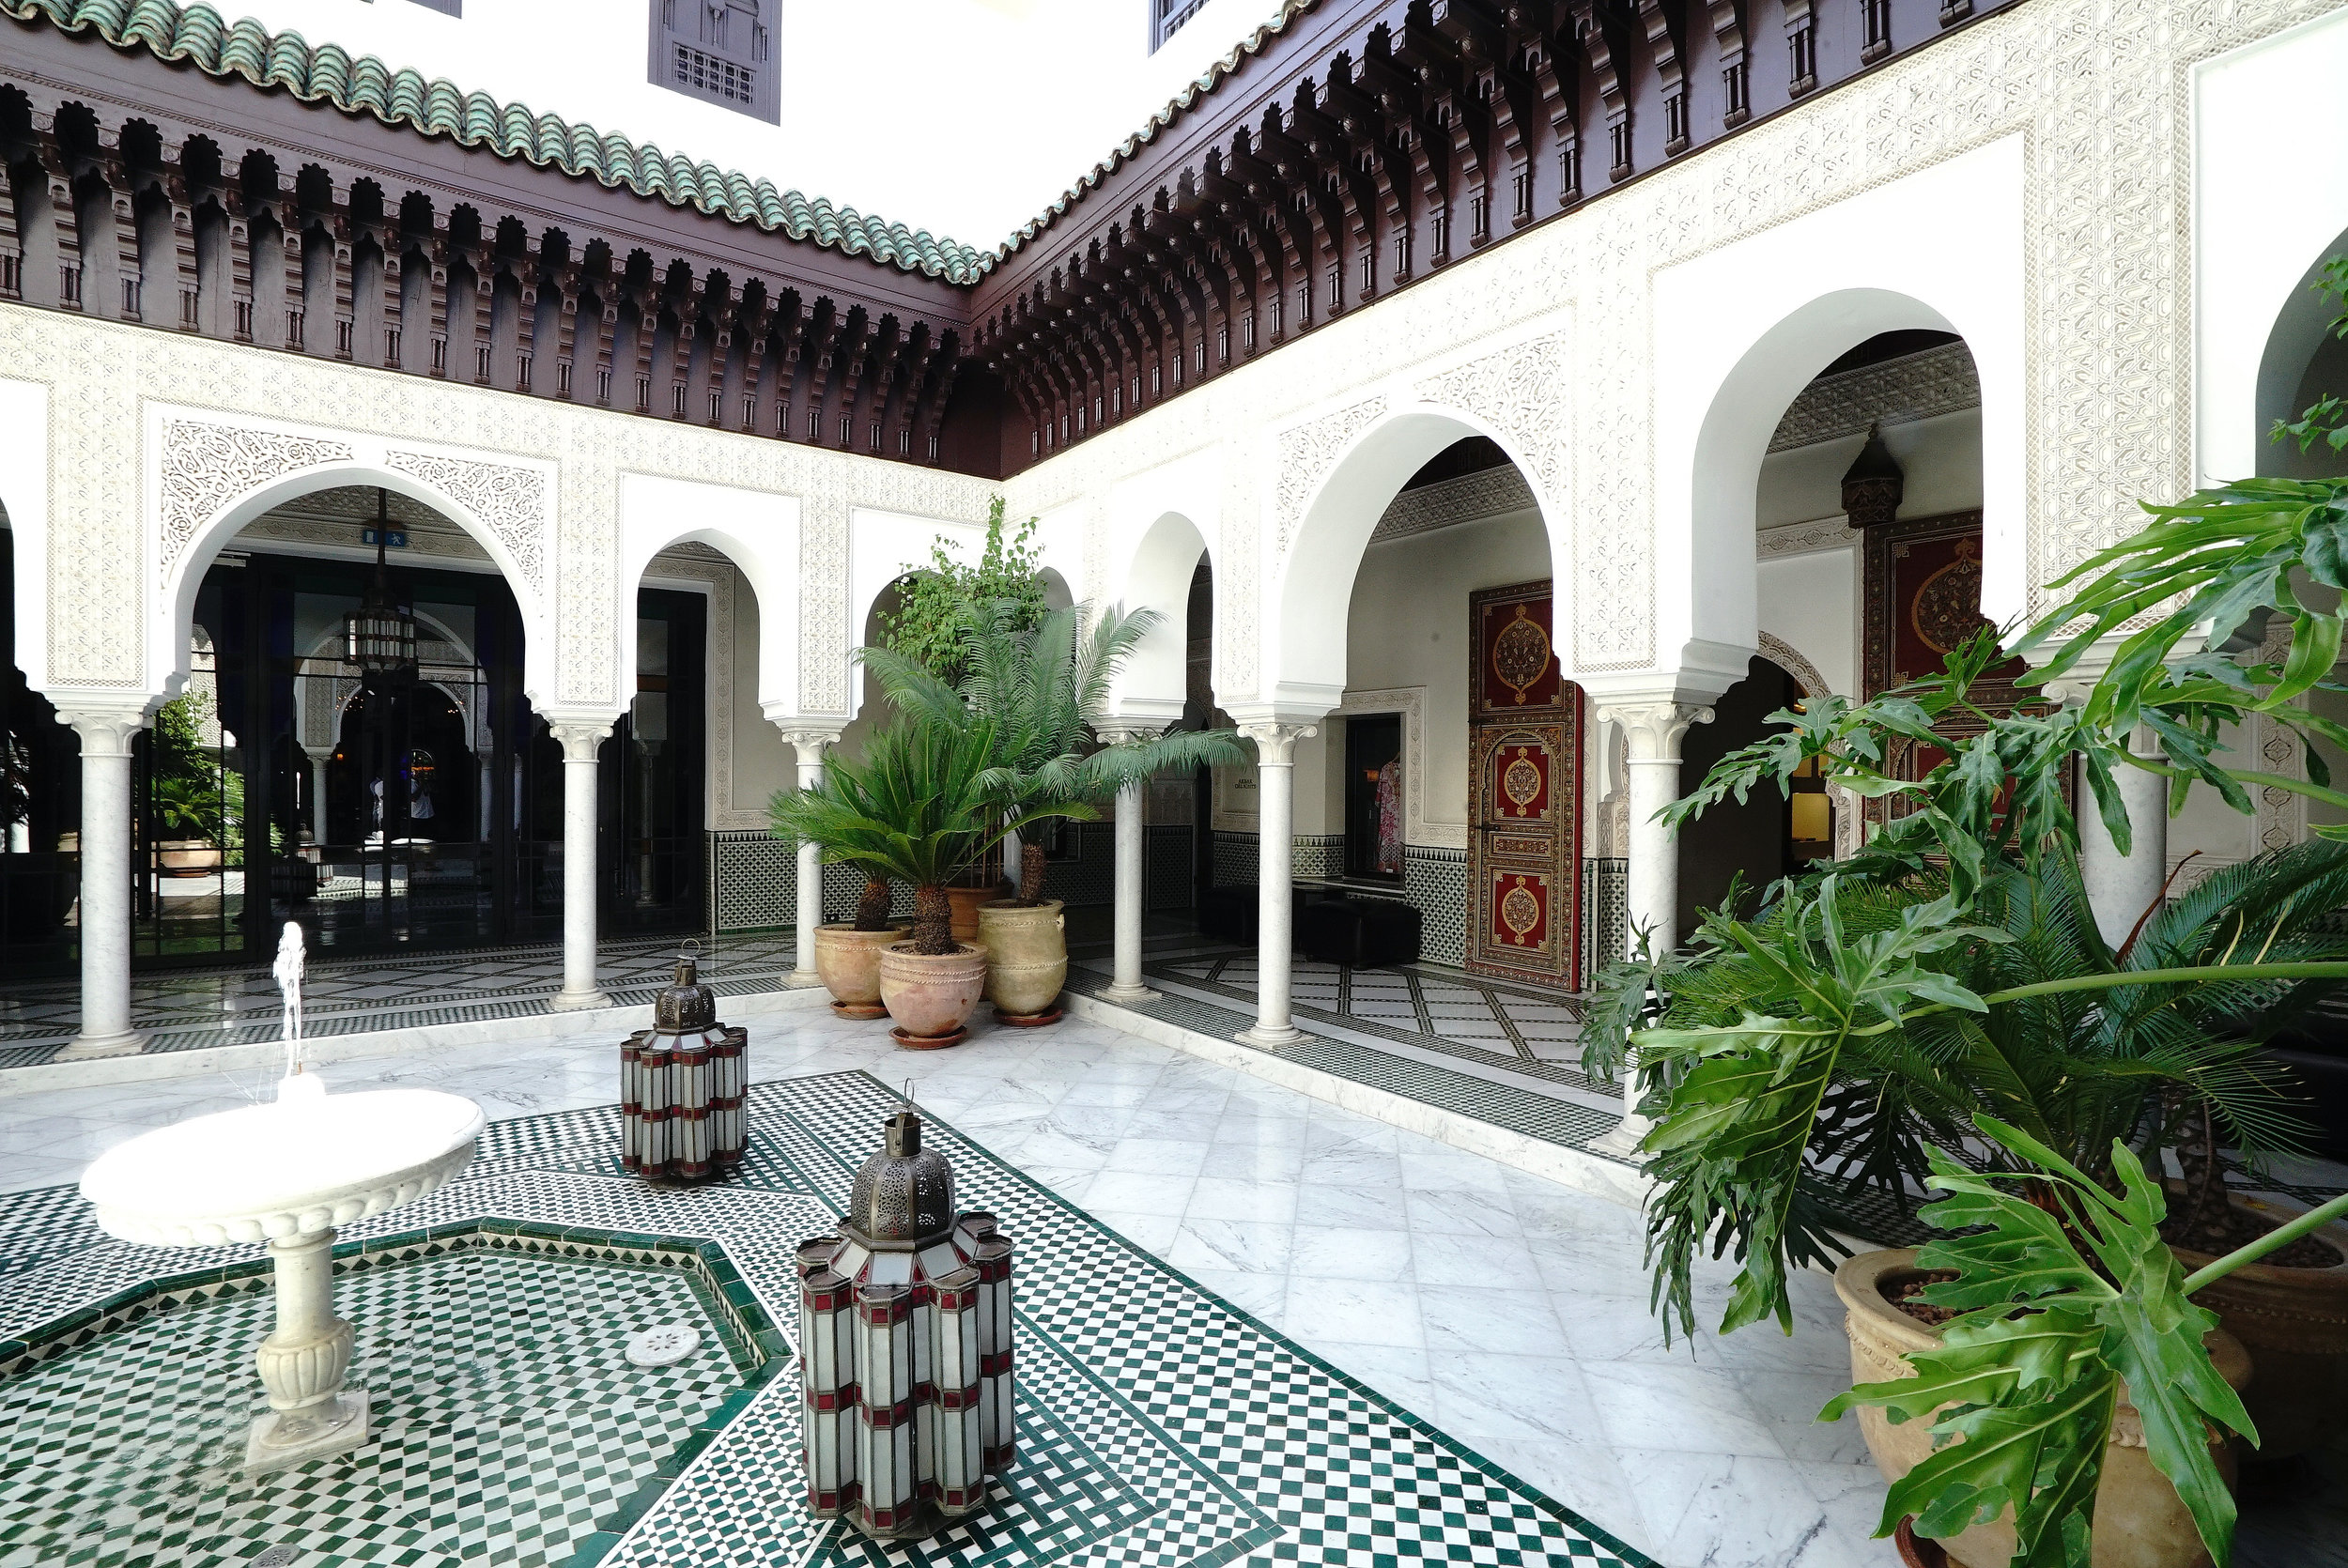 La Mamounia Morocco Courtyard.jpg